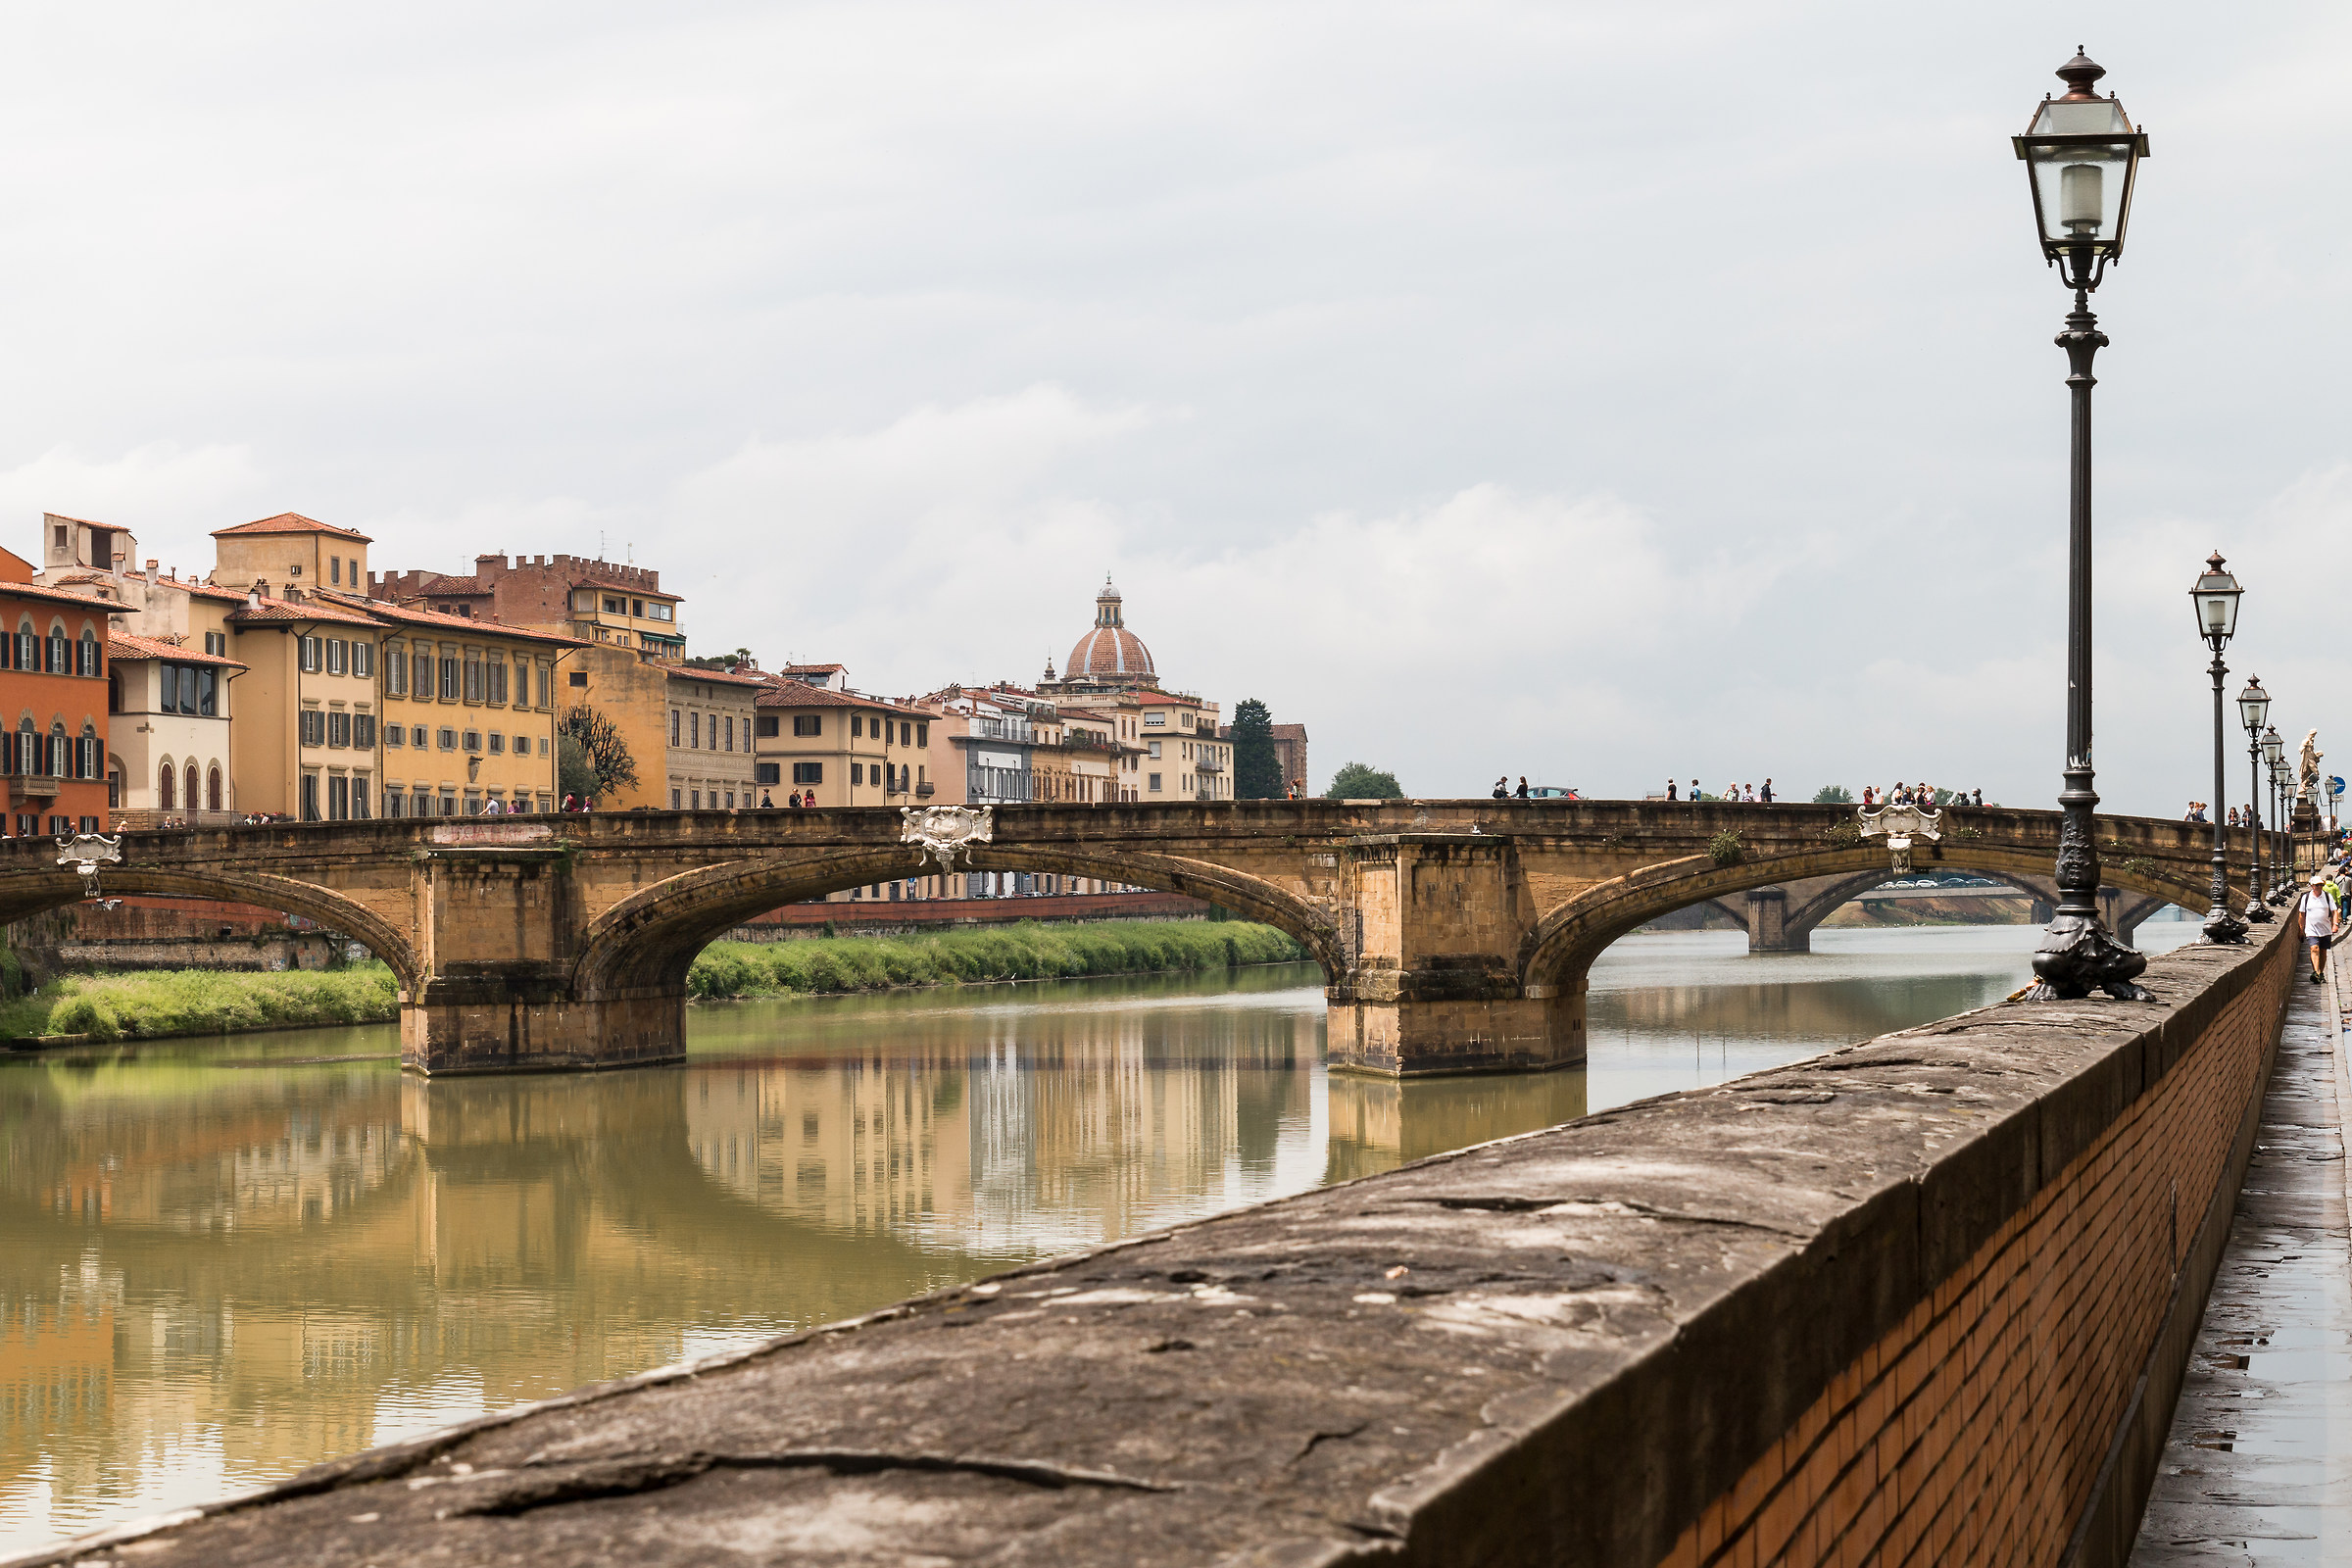 Walk along the Arno...